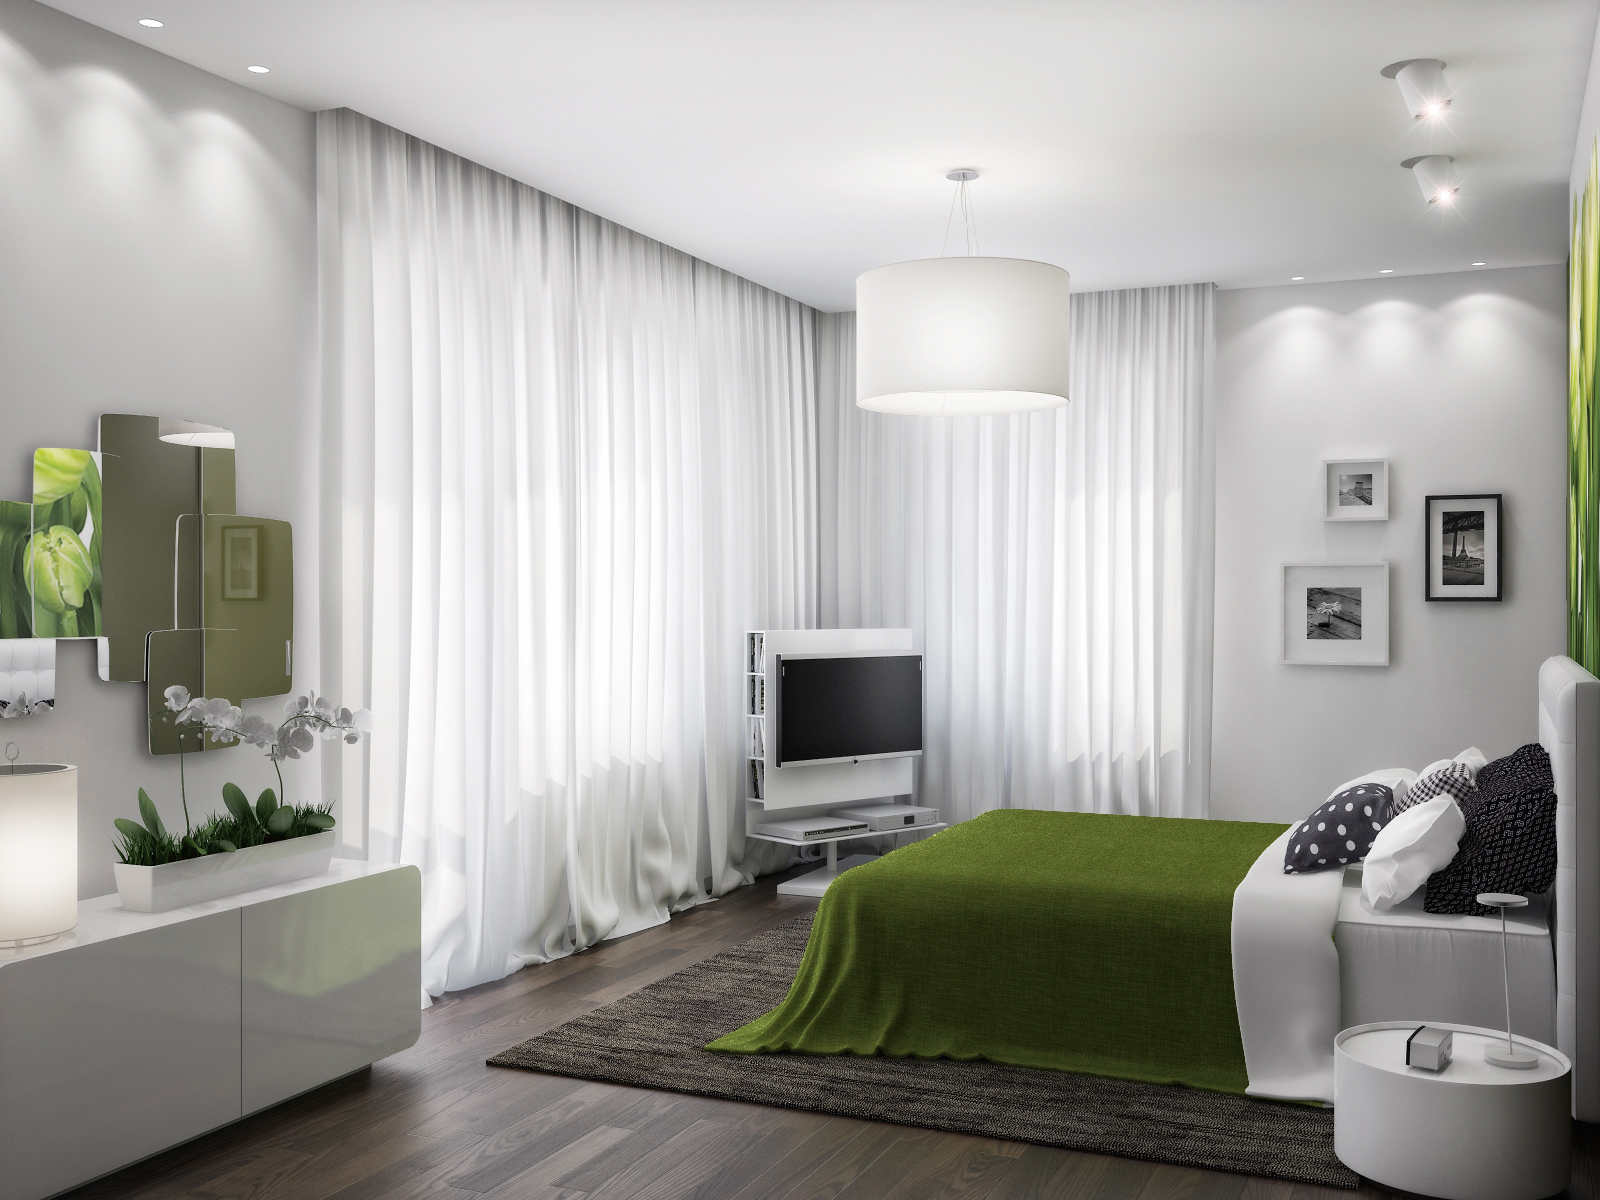 Design ideas for the master bedroom "width =" 1600 "height =" 1200 "srcset =" https://mileray.com/wp-content/uploads/2020/05/10-Beautiful-Master-Bedroom-Design-Ideas-For-Couple.jpeg 1600w, https: / /mileray.com/wp-content/uploads/2016/05/Azovskiy-Pahomova-Architects-2-300x225.jpeg 300w, https://mileray.com/wp-content/uploads/2016/05/Azovskiy-Pahomova- Architects-2-768x576.jpeg 768w, https://mileray.com/wp-content/uploads/2016/05/Azovskiy-Pahomova-Architects-2-1024x768.jpeg 1024w, https://mileray.com/wp- content / uploads / 2016/05 / Azovskiy-Pahomova-Architects-2-80x60.jpeg 80w, https://mileray.com/wp-content/uploads/2016/05/Azovskiy-Pahomova-Architects-2-265x198.jpeg 265w, https://mileray.com/wp-content/uploads/2016/05/Azovskiy-Pahomova-Architects-2-696x522.jpeg 696w, https://mileray.com/wp-content/uploads/2016/05 /Azovskiy-Pahomova-Architects-2-1068x801.jpeg 1068w, https://mileray.com/wp-content/uploads/2016/05/Azovskiy-Pahomova-Architects-2-560x420.jpeg 560w "sizes =" (max - width: 1600px) 100vw, 1600px